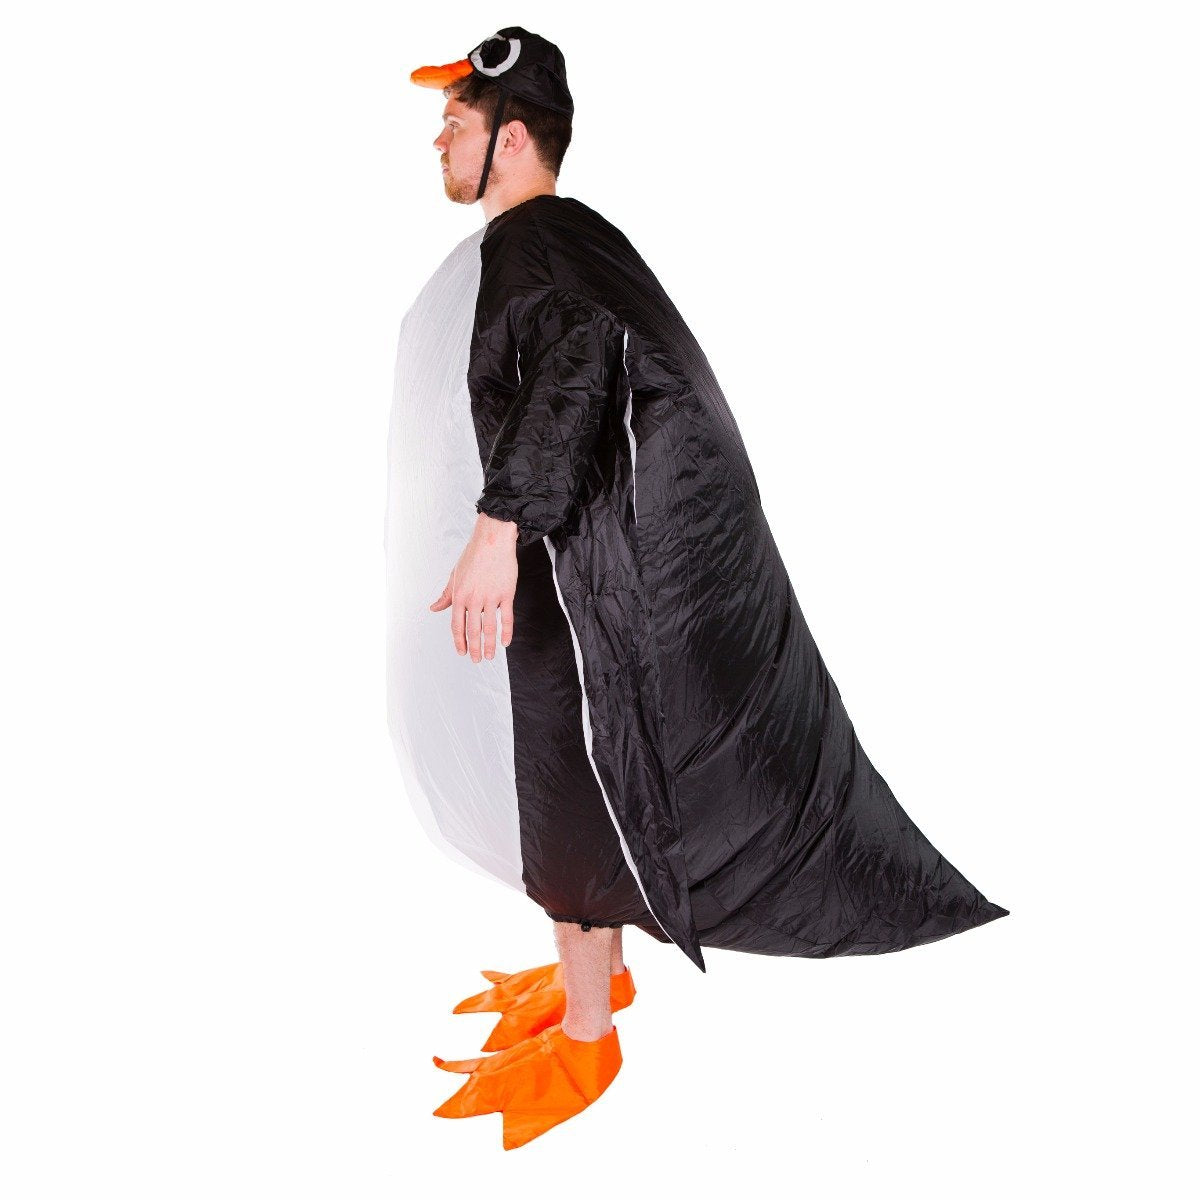 Bodysocks - Inflatable Penguin Costume